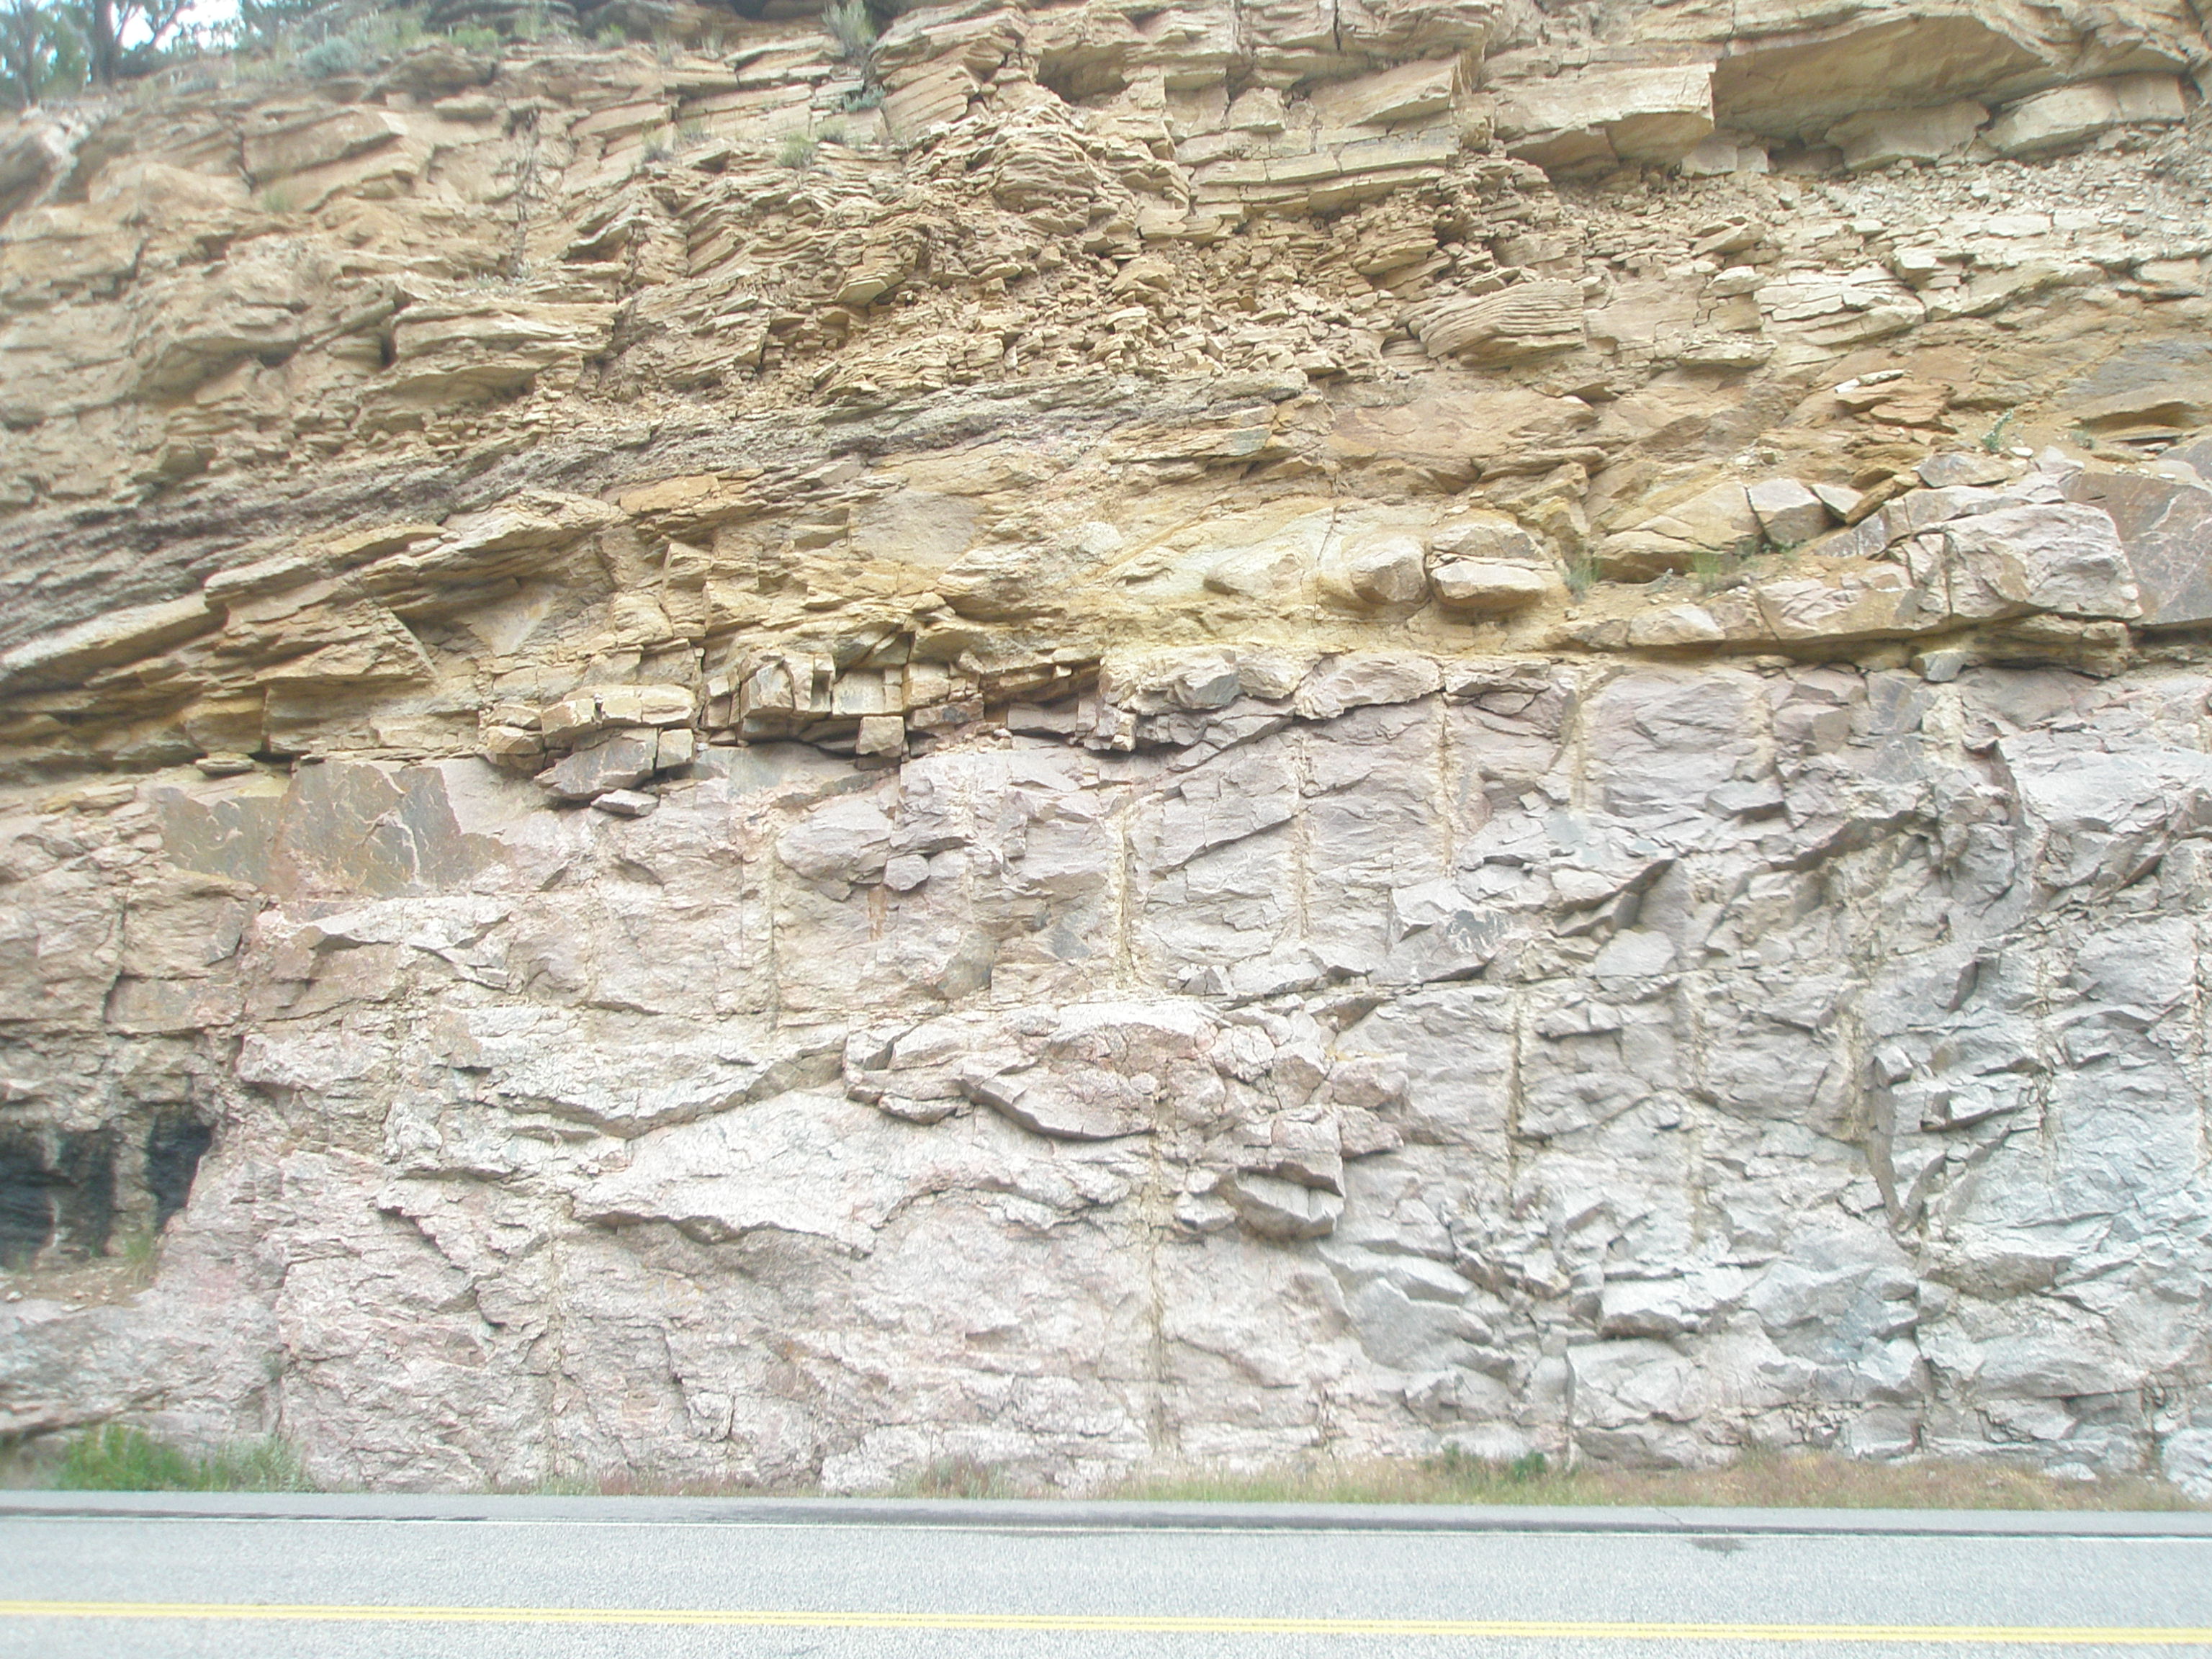 Great Unconformity between Precambrian and Cambrian rocks in Wyoming